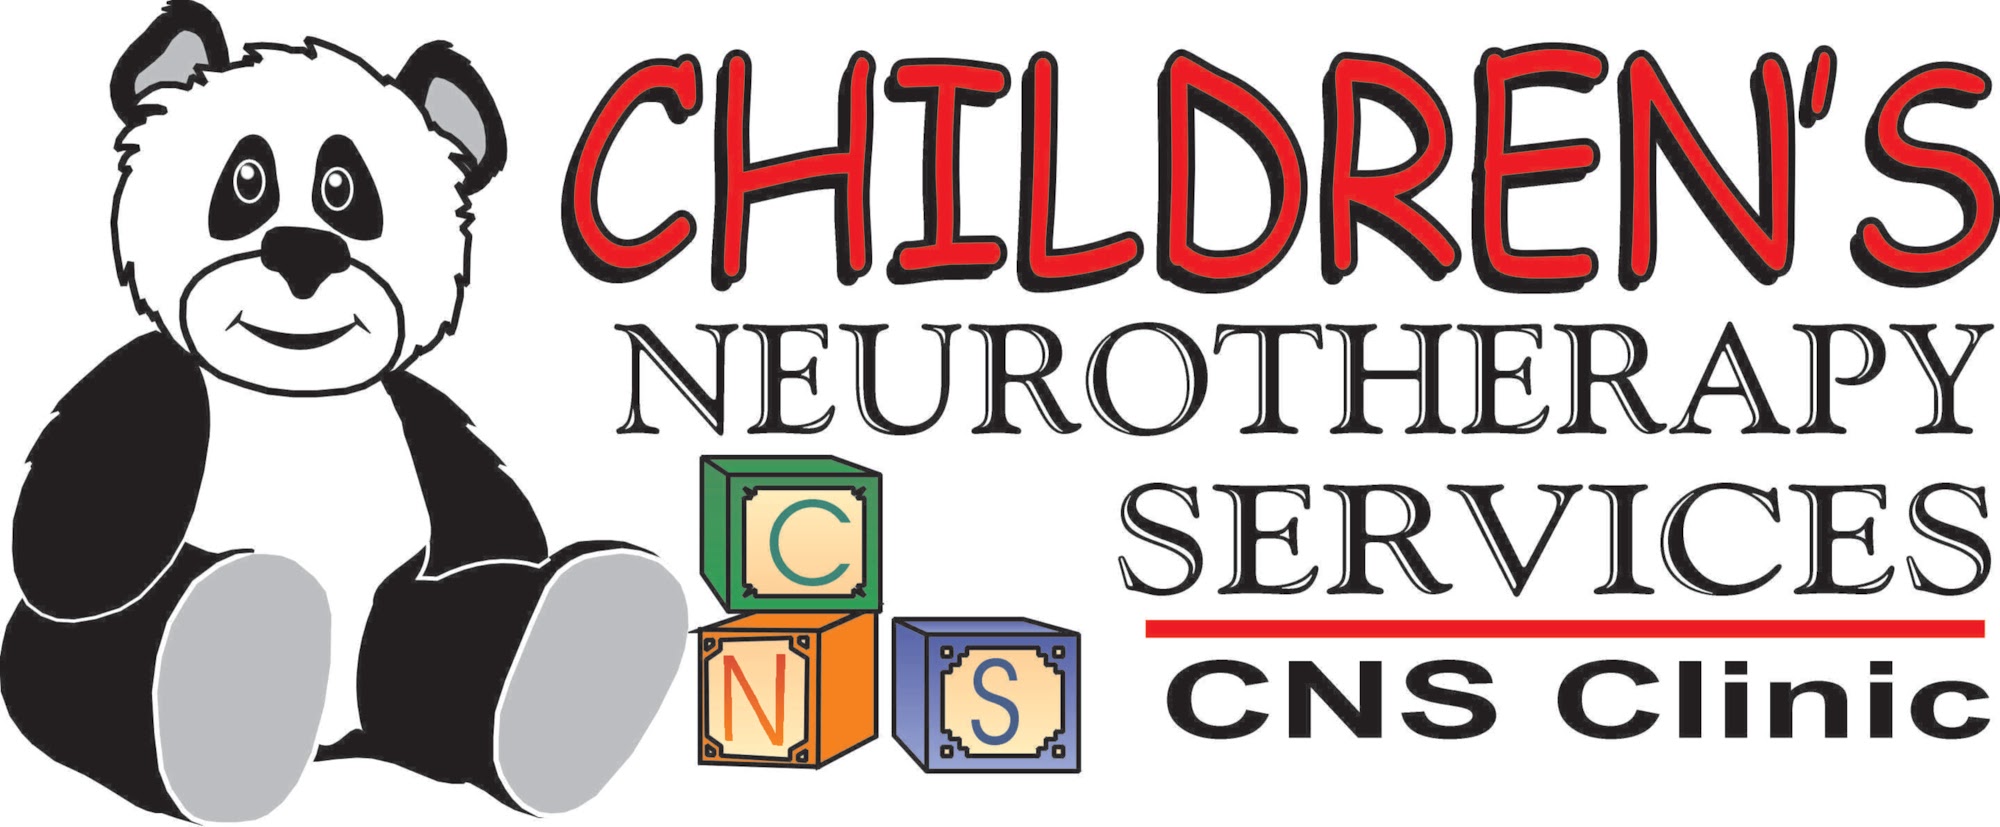 Children's Neurotherapy Services 4012 Hickory Blvd, Granite Falls North Carolina 28630